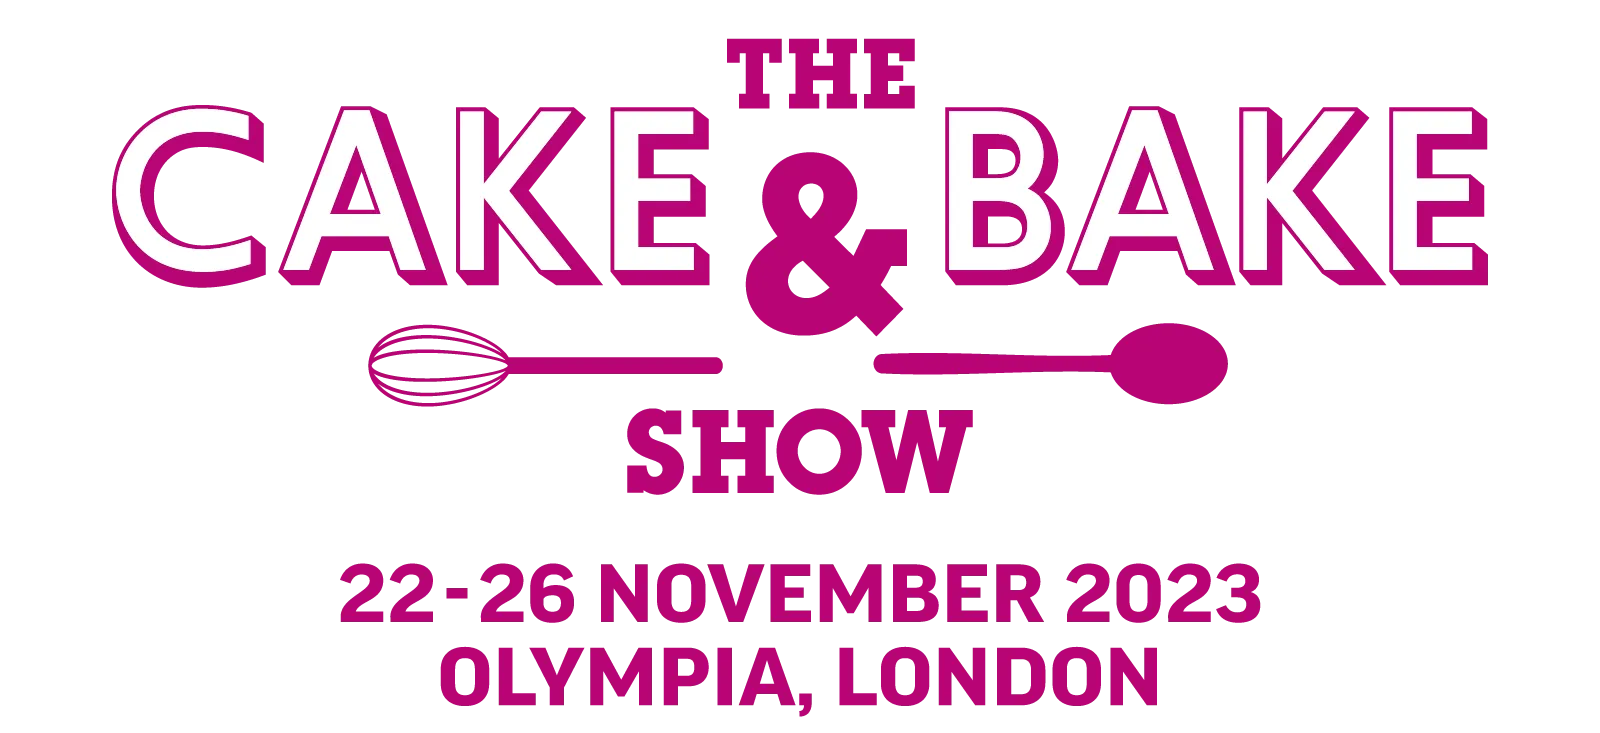 The Cake & Bake Show London